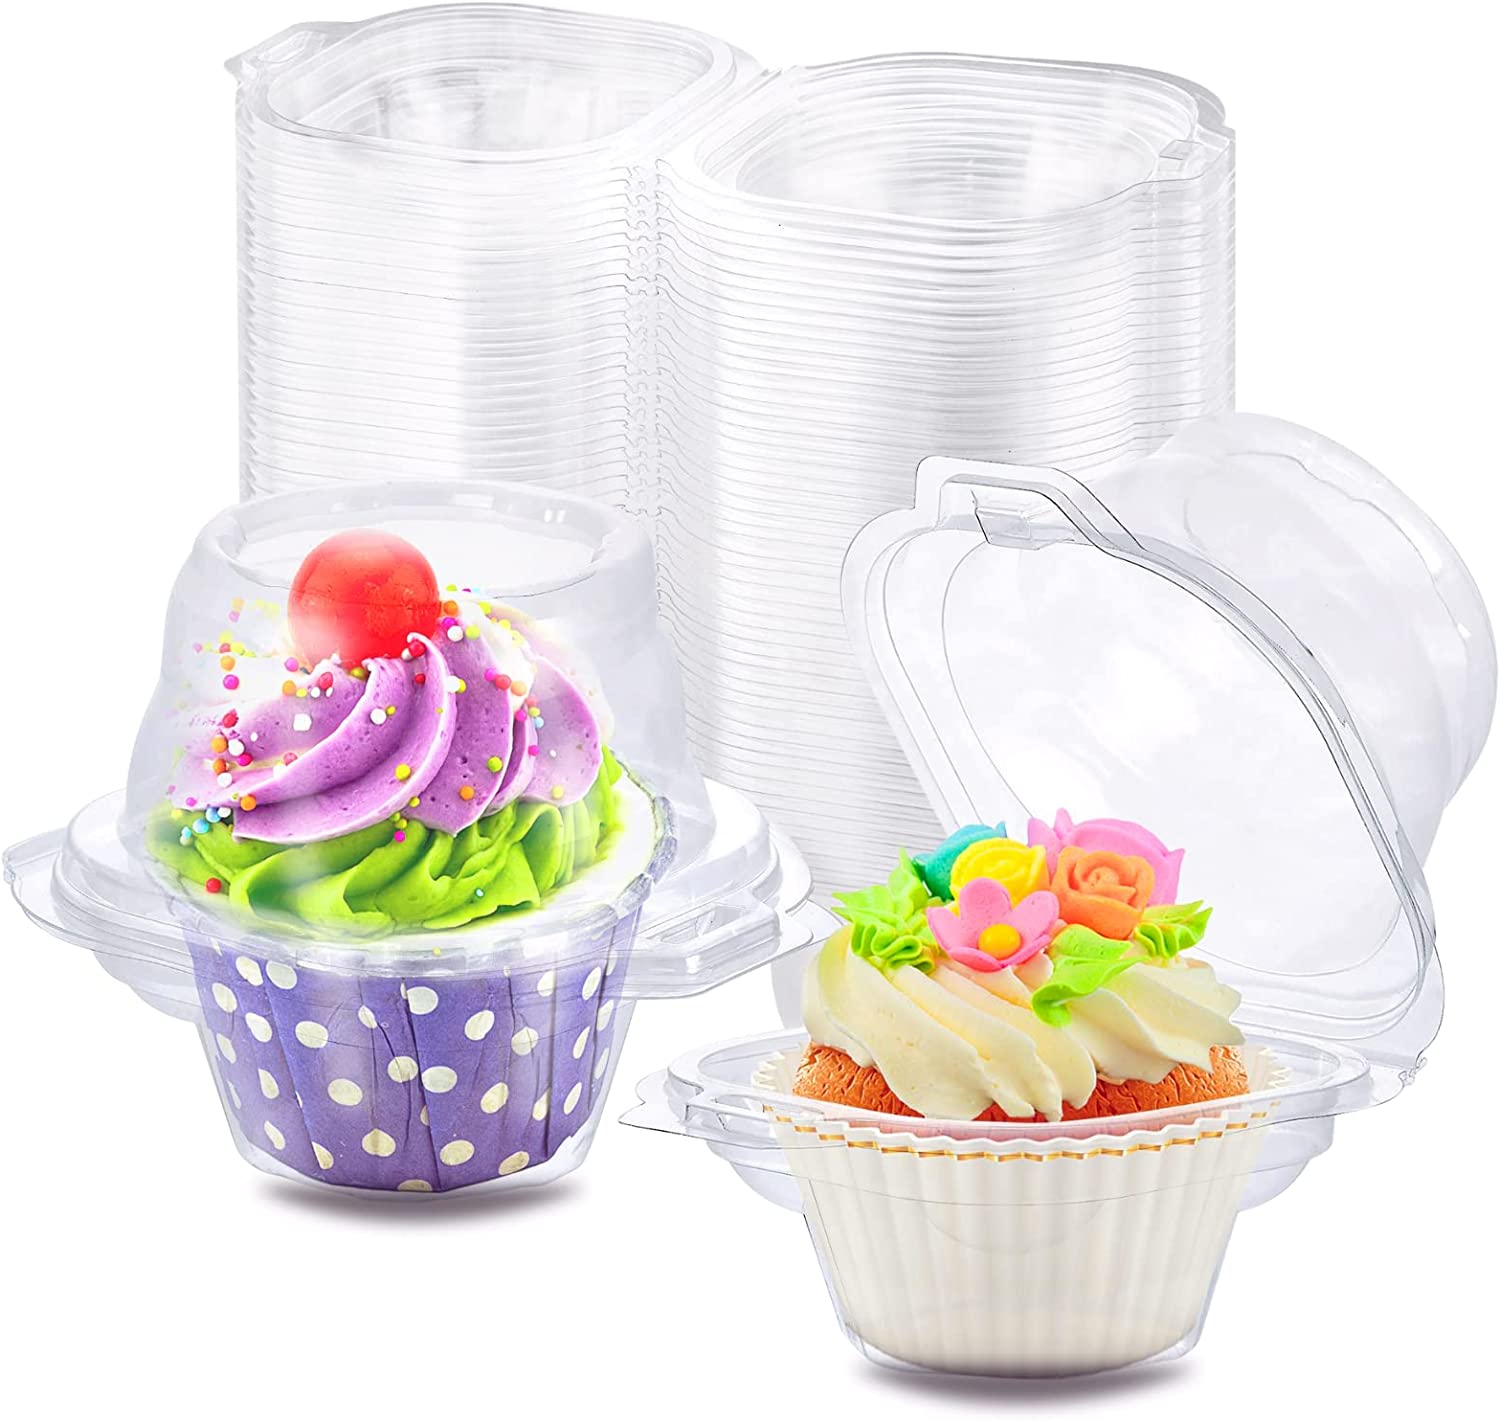  MR.FOAM Clear Plastic Mini Cupcake Container,50 PC